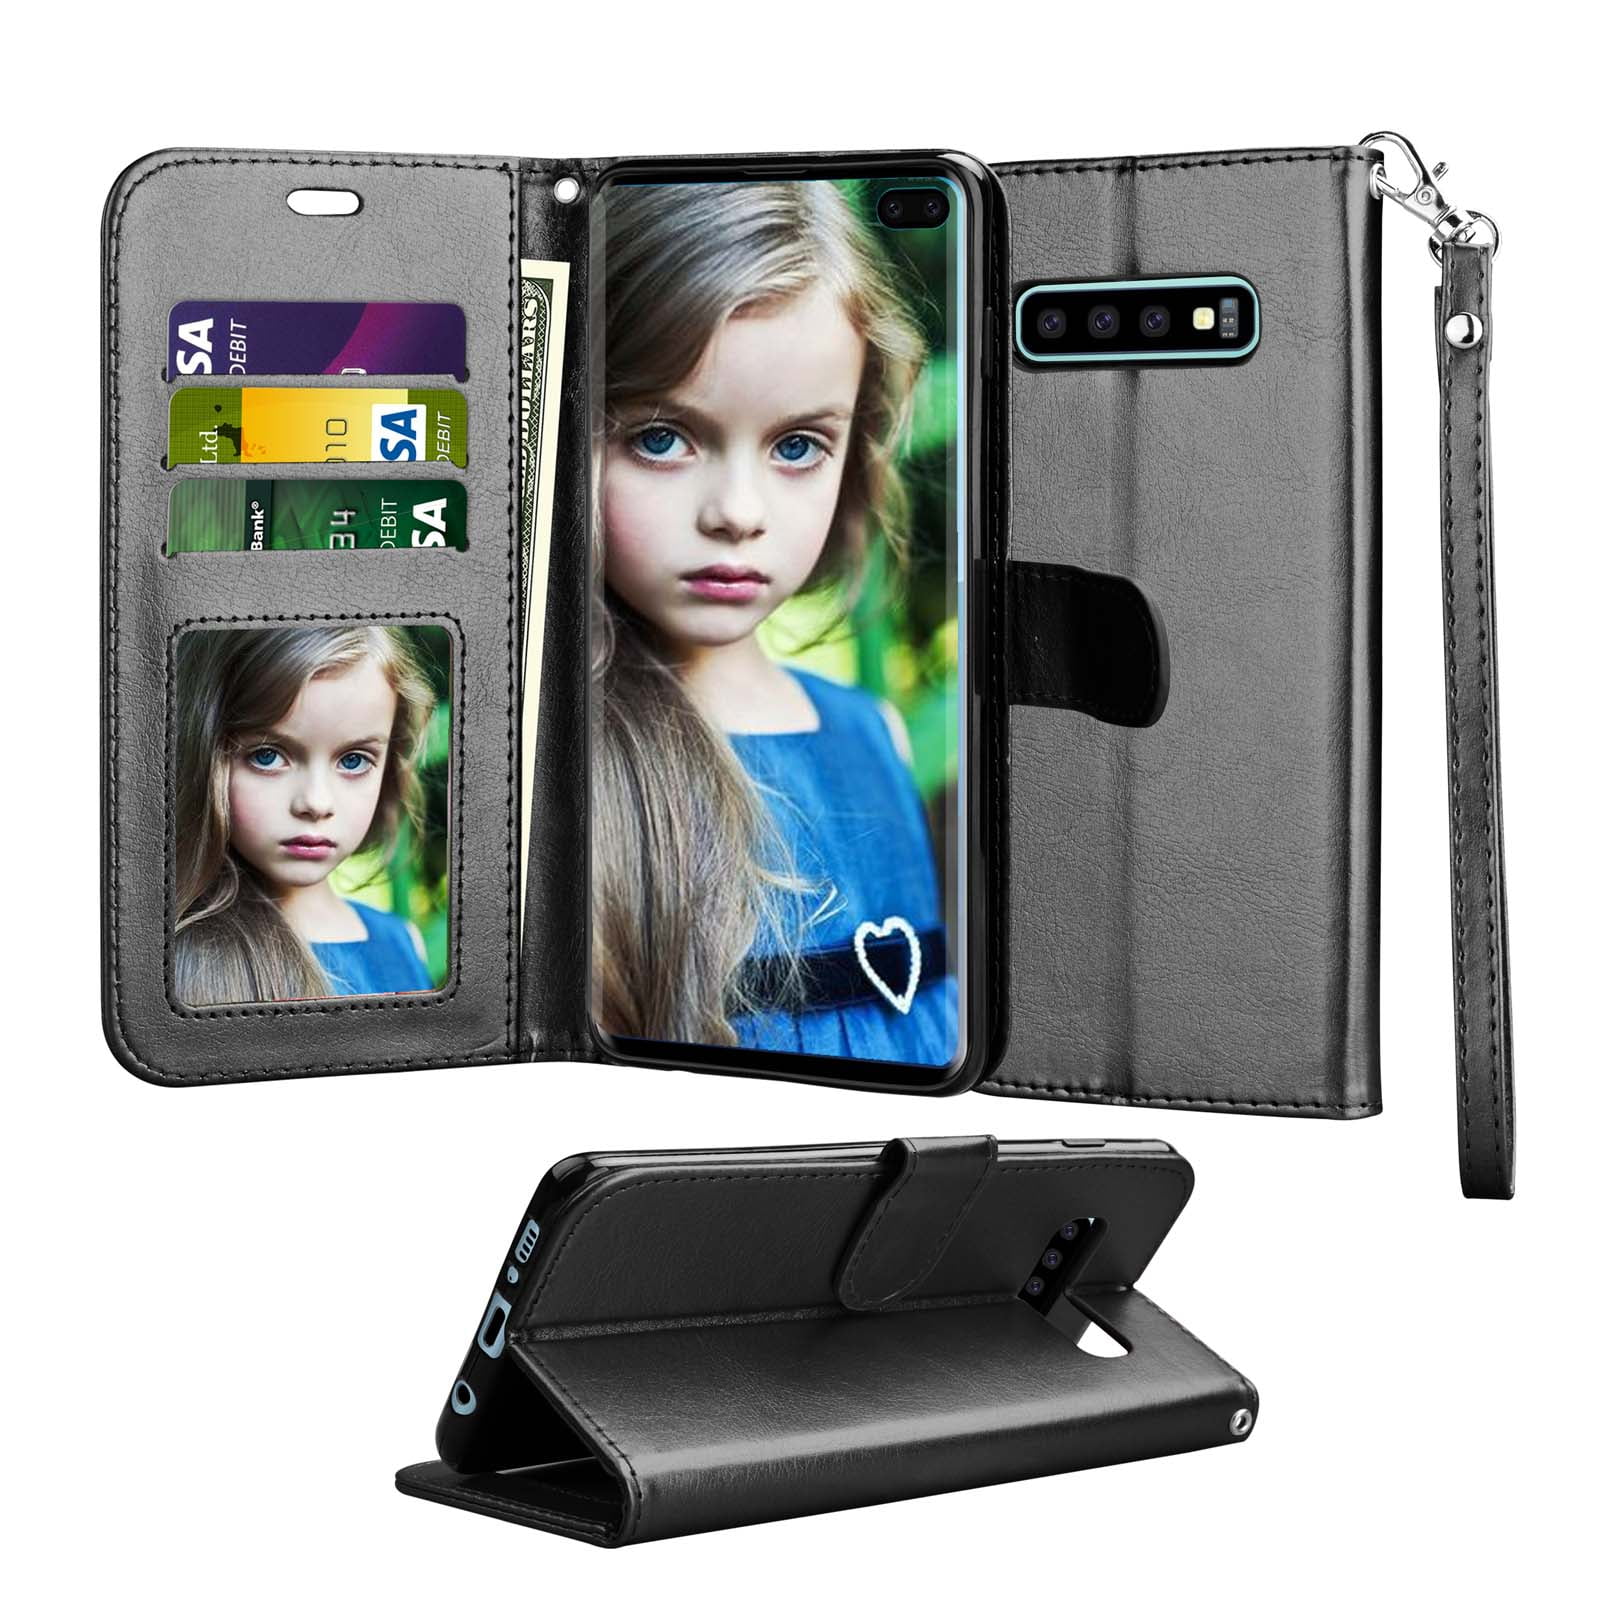 Black Wallet Case for Samsung Galaxy S10 Plus Leather Cover Compatible with Samsung Galaxy S10 Plus